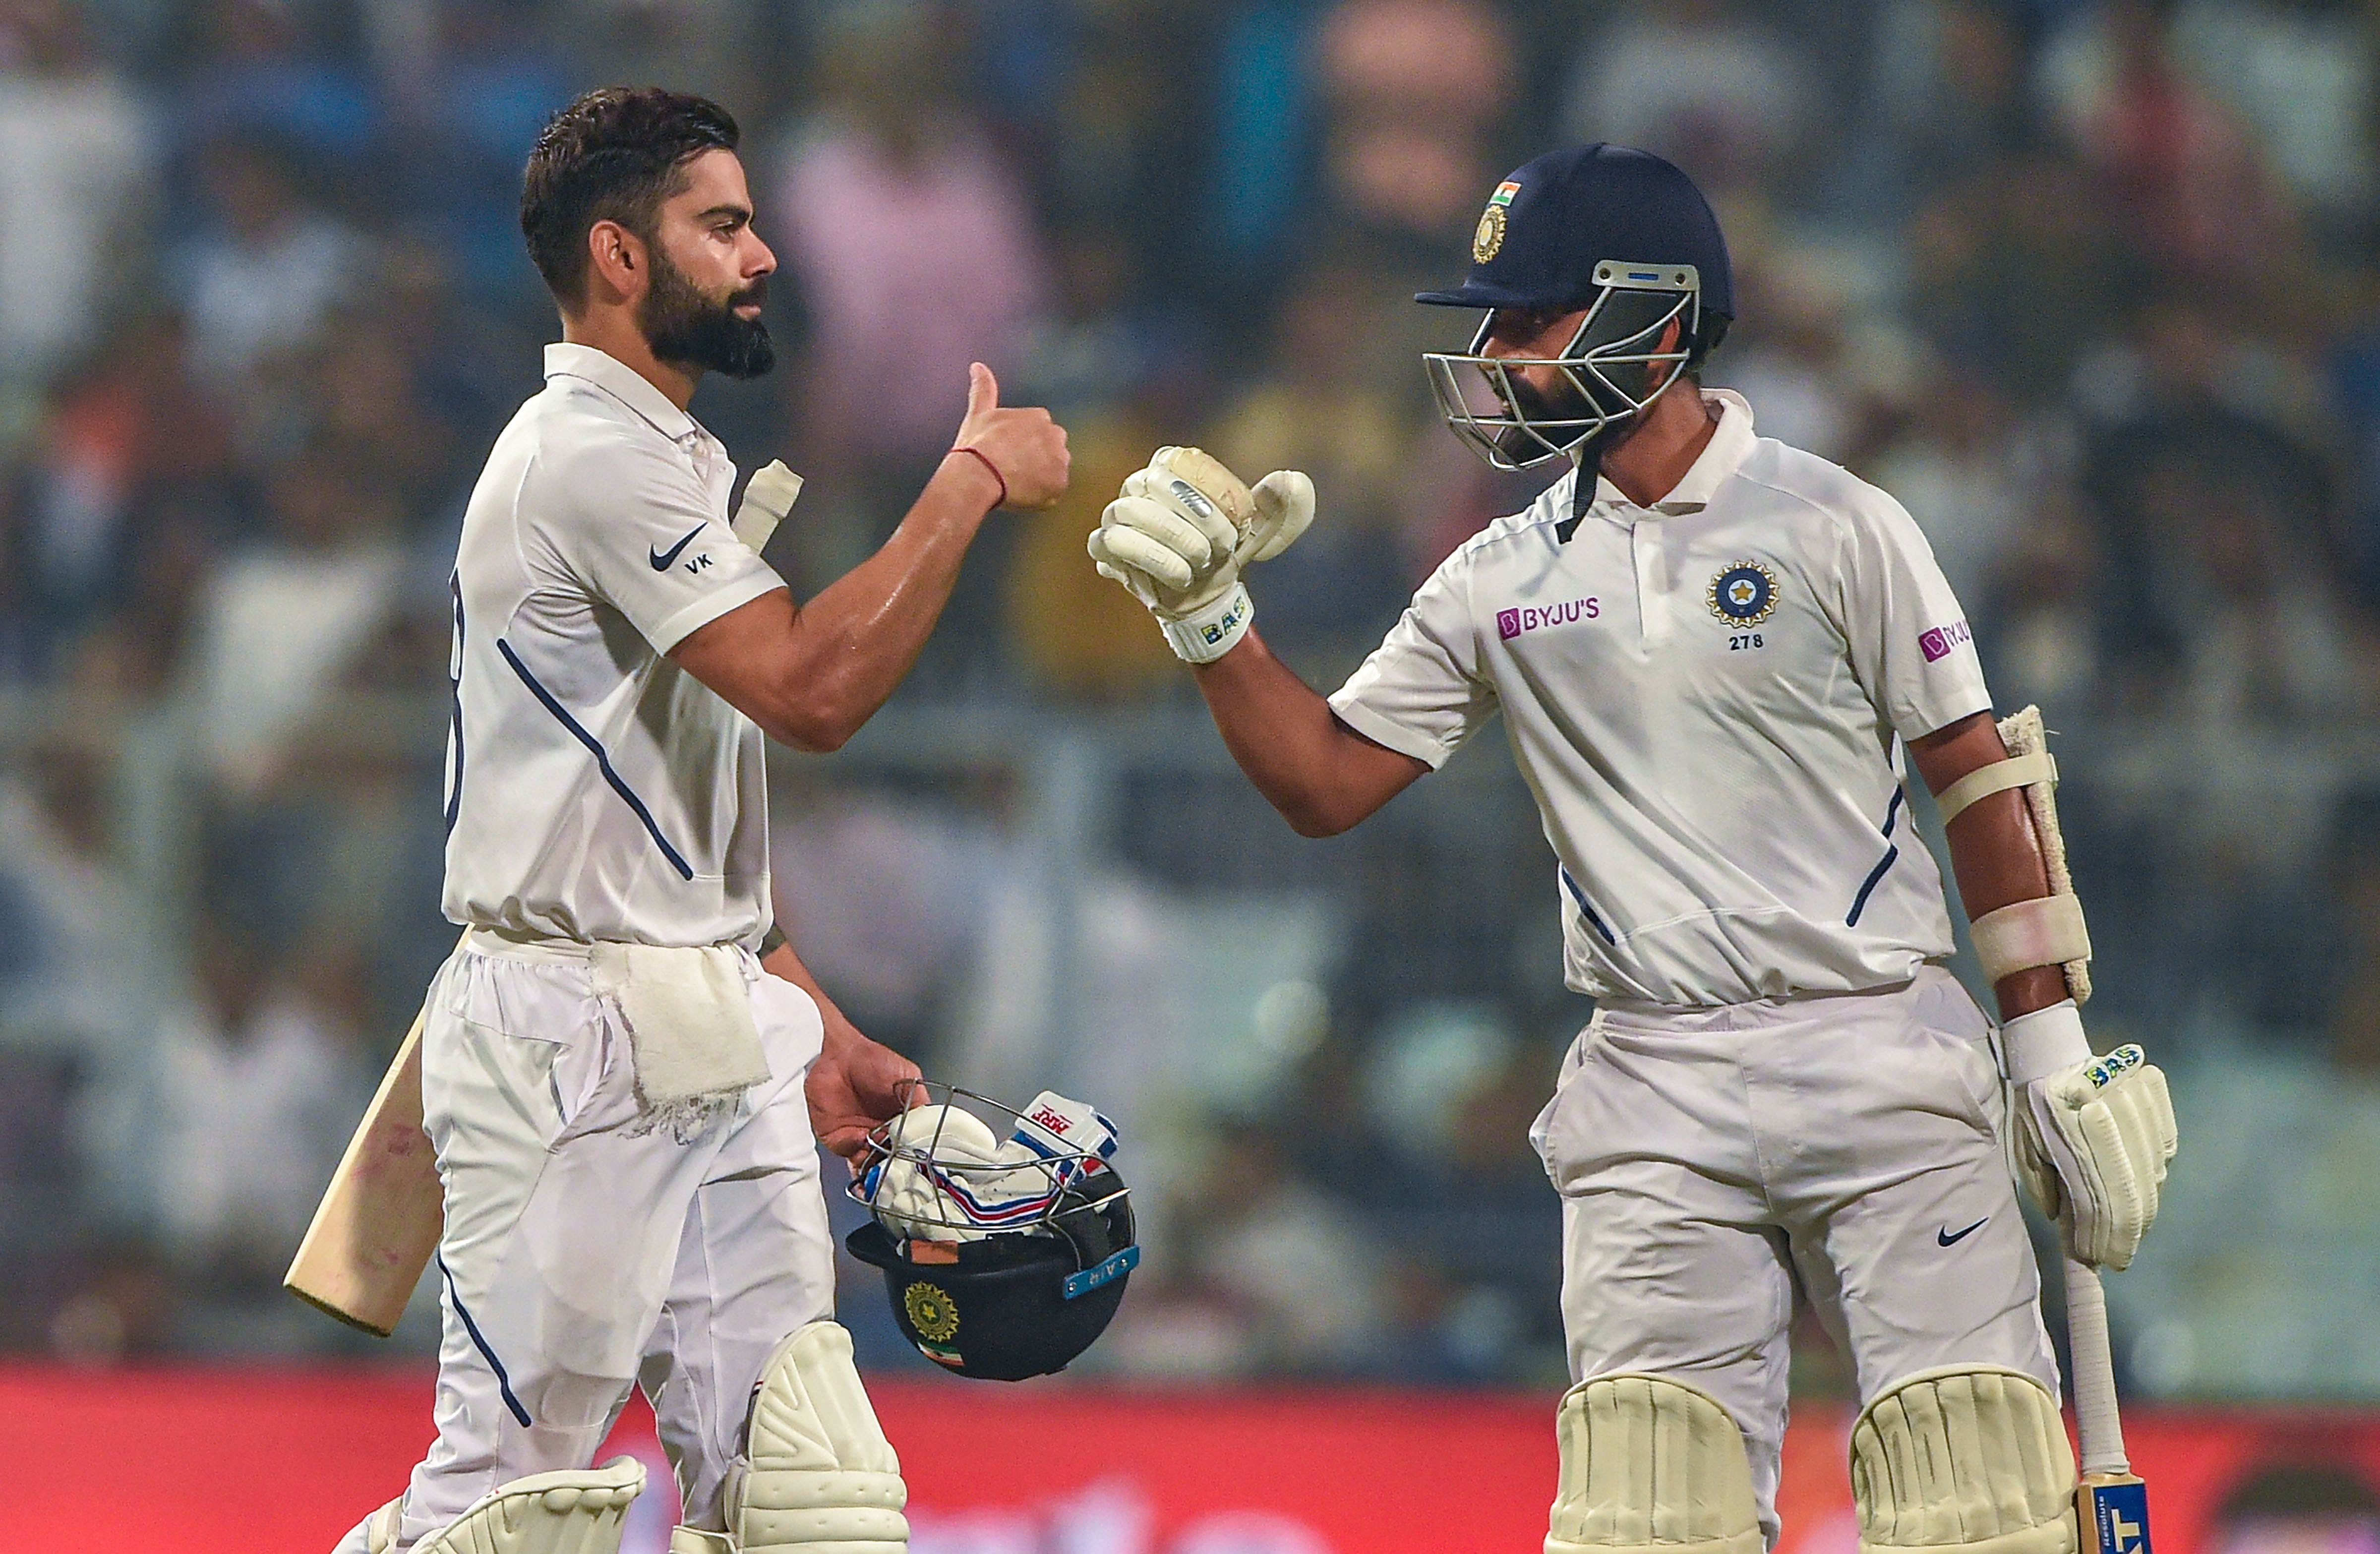 After Rahanes Aus exploits, spotlight on Kohli during Englands India tour